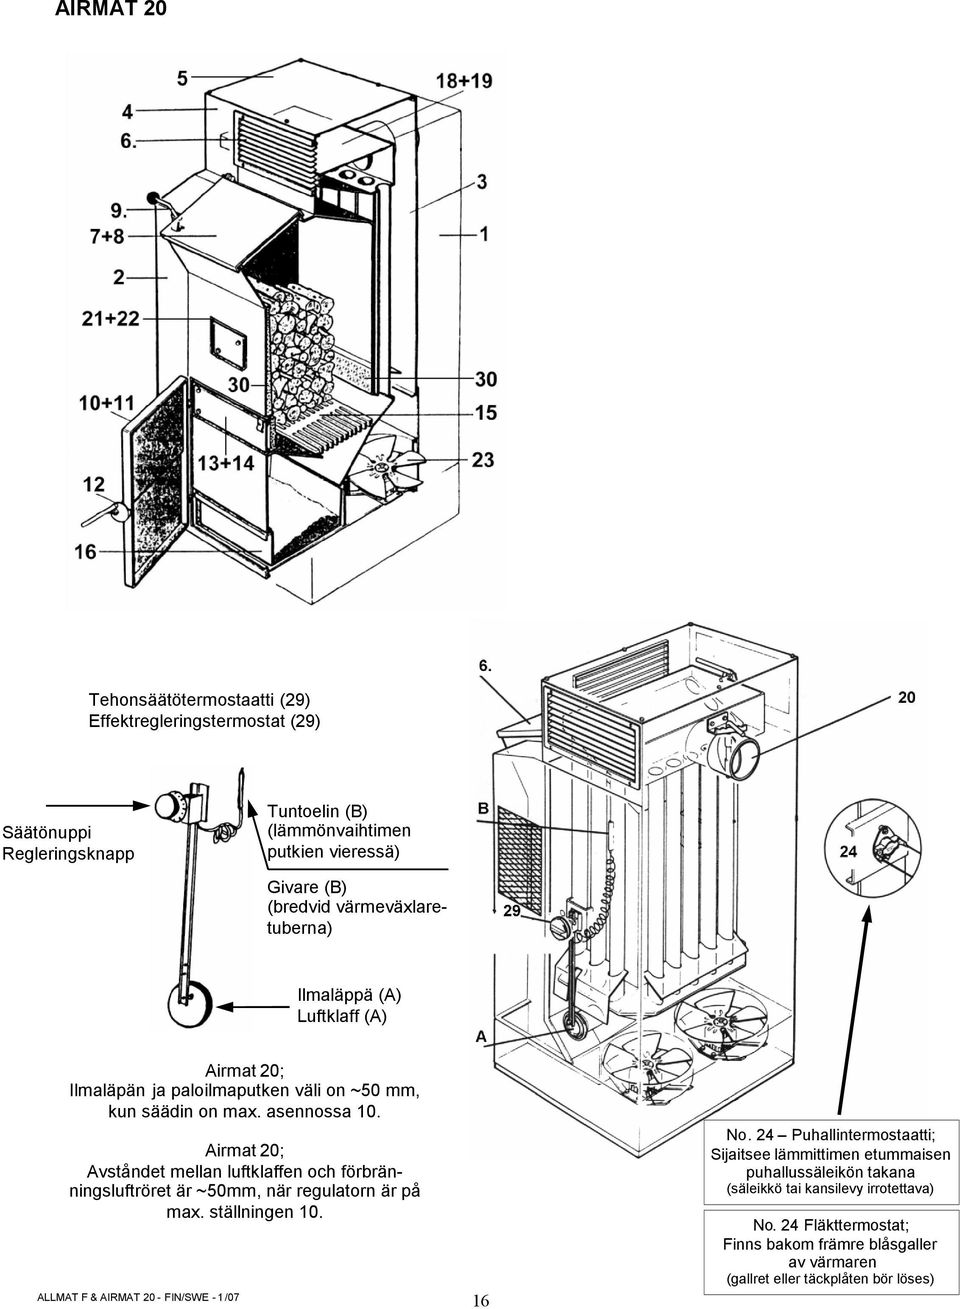 24 Puhallintermostaatti; Sijaitsee lämmittimen etummaisen puhallussäleikön takana Airmat 20; Avståndet mellan luftklaffen och förbränningsluftröret är ~50mm, när